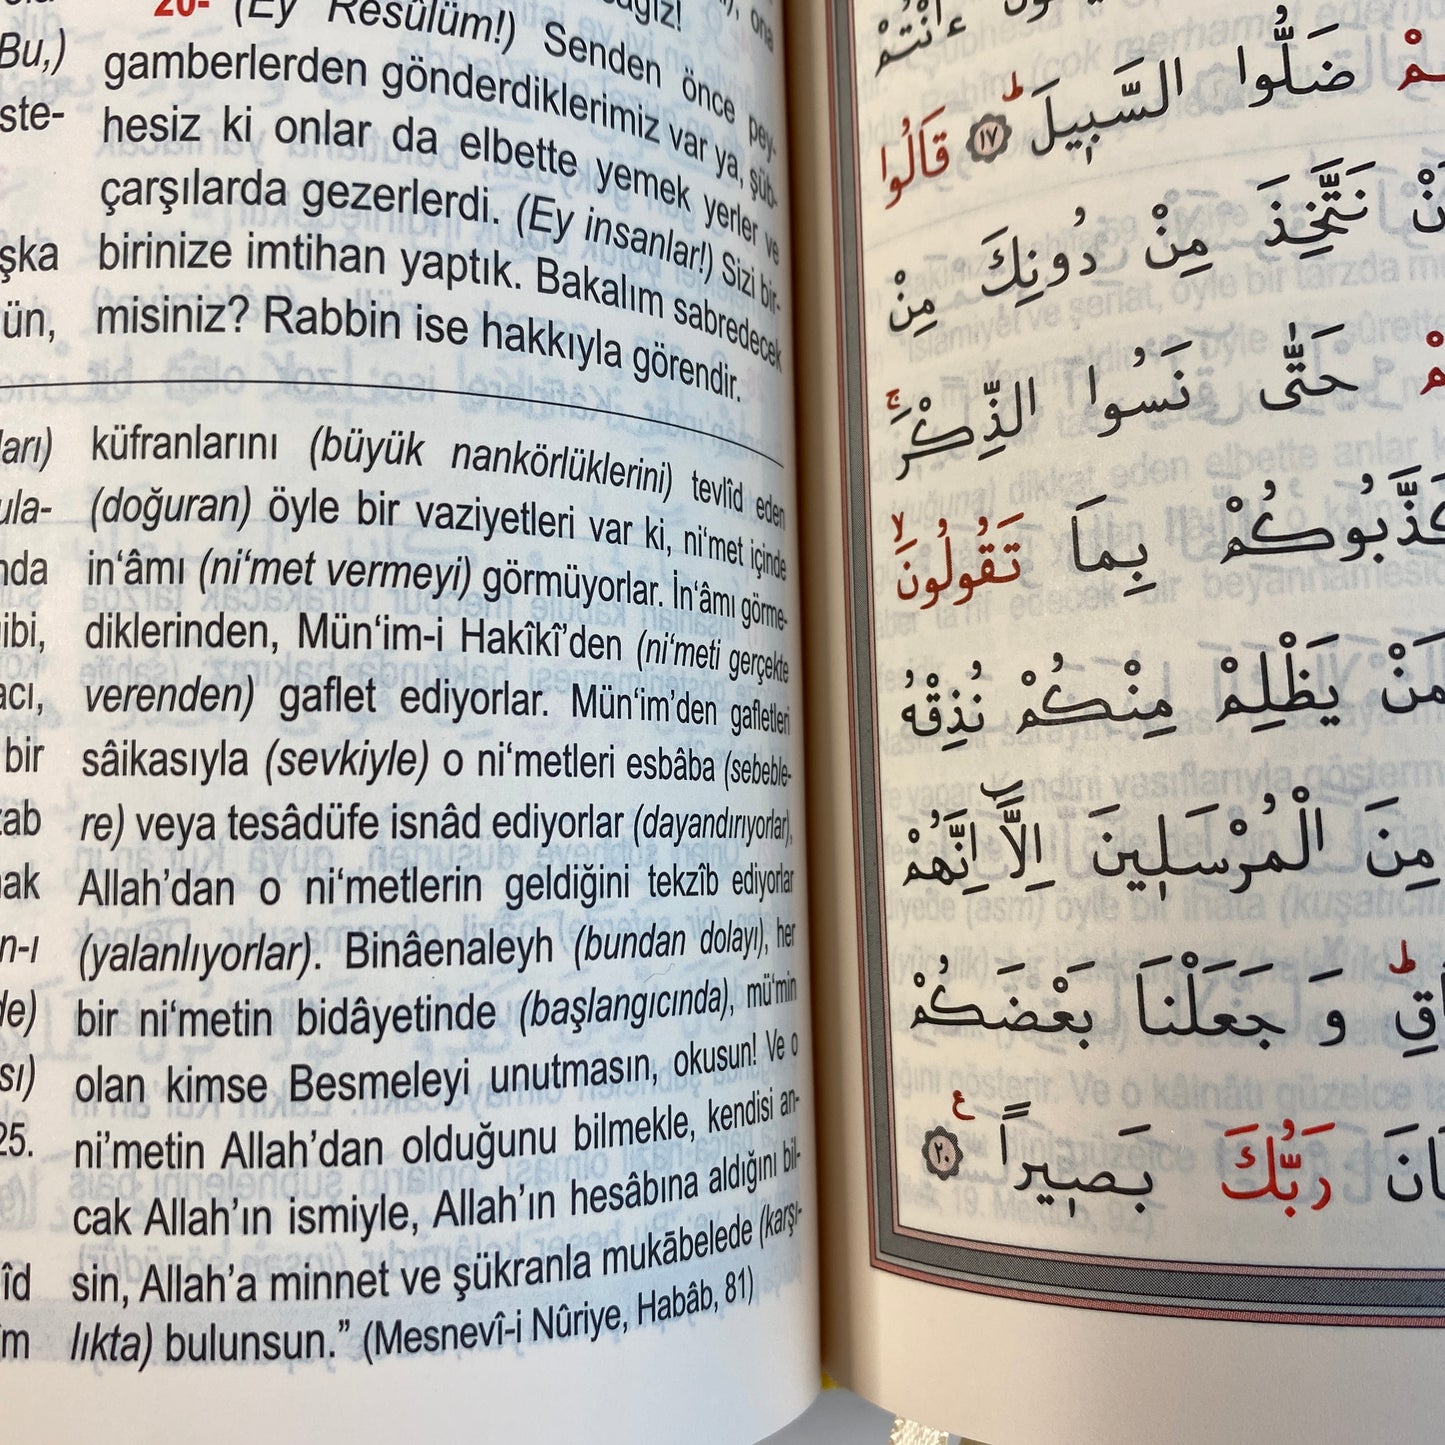 Personalisierter Koran (Kurani Kerim ve Meali)